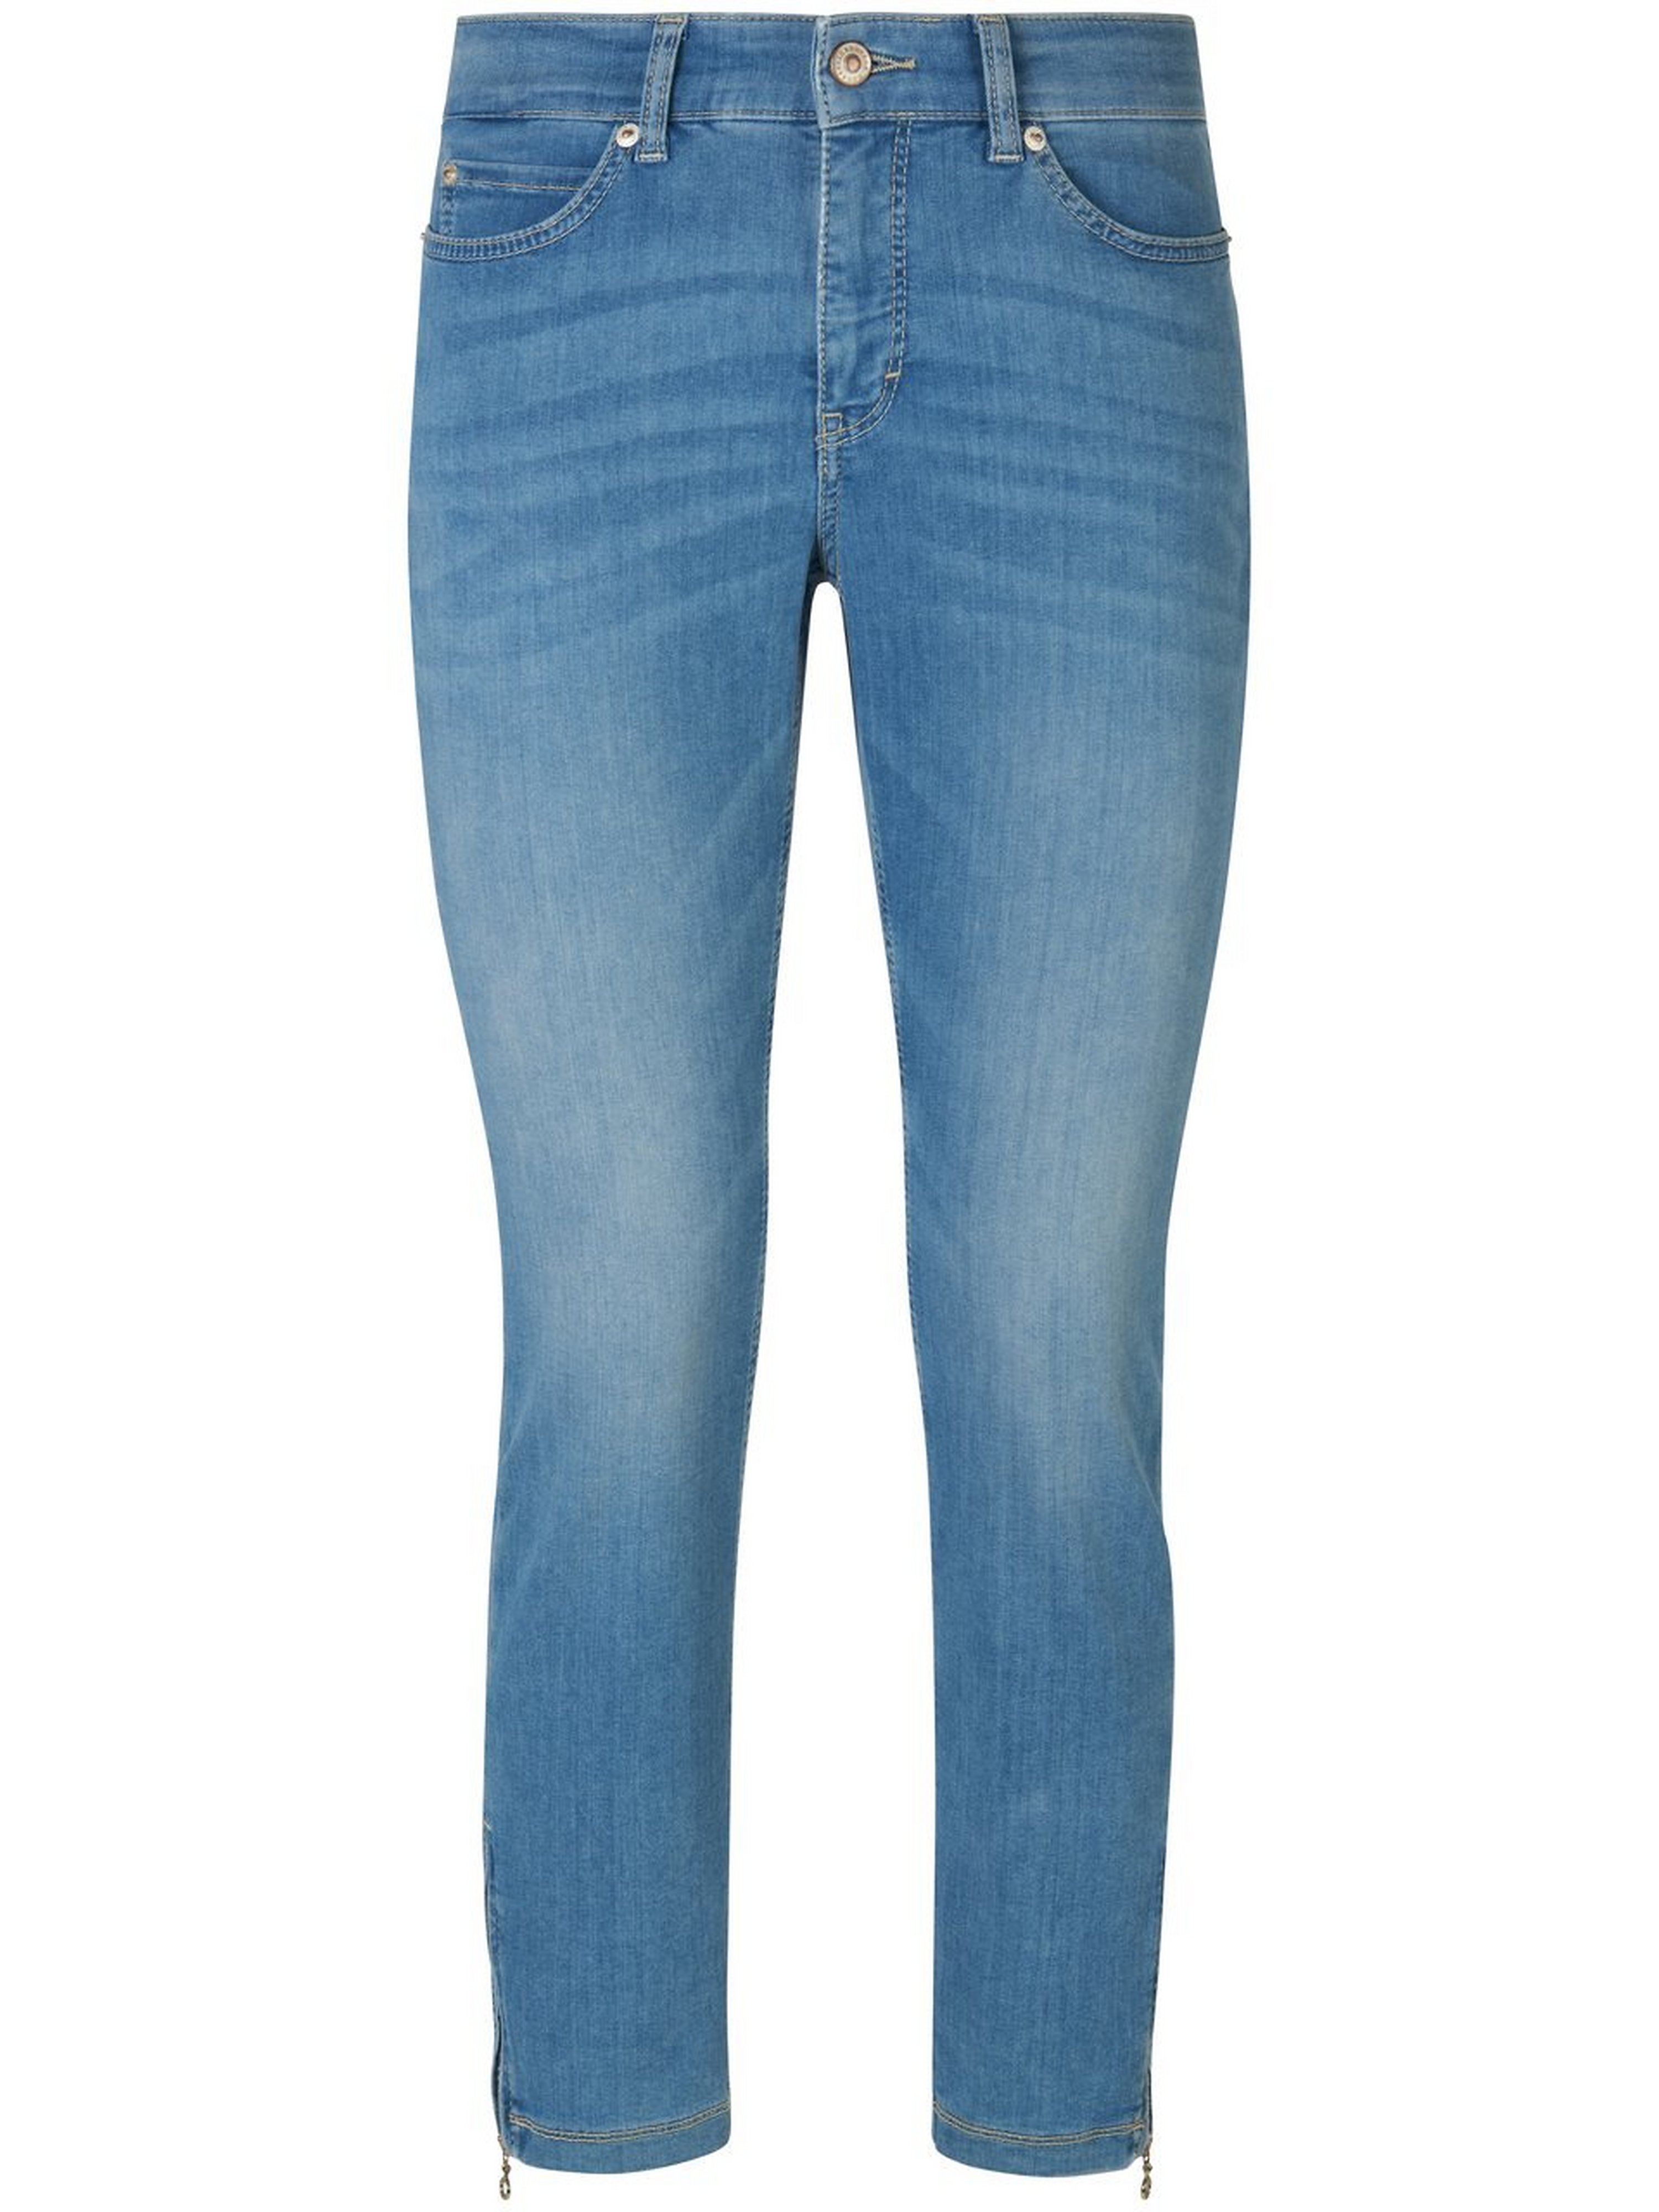 Jeans Dream Chic extra smalle pijpen Van Mac denim